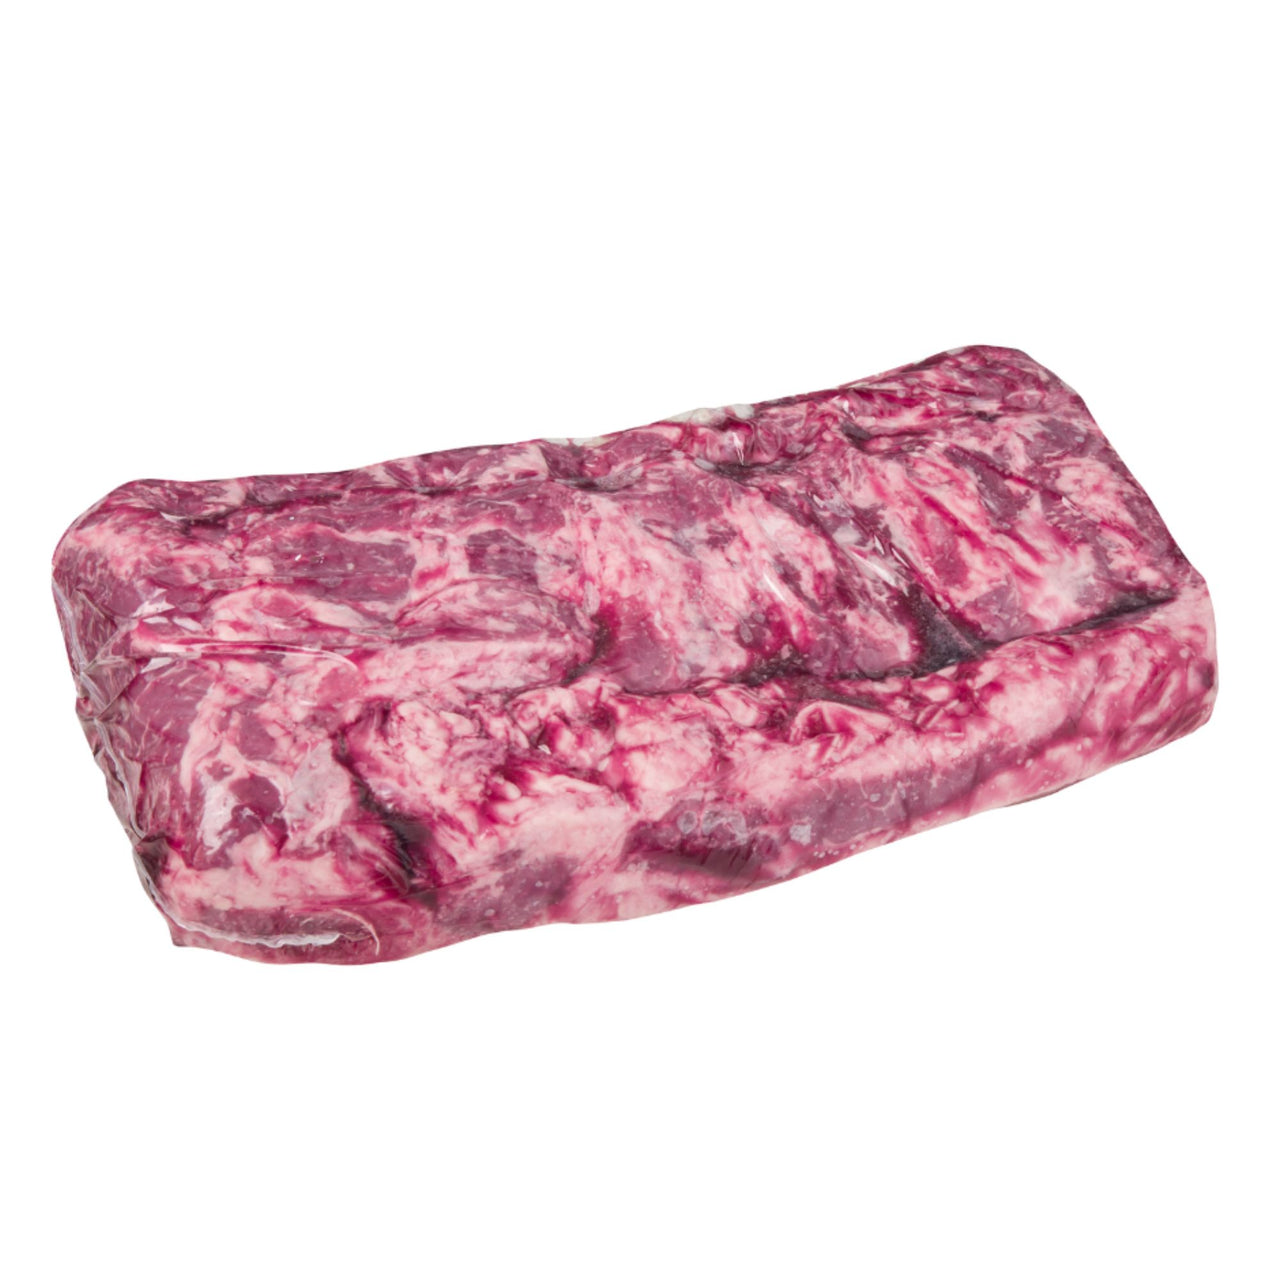 Image of AA Boneless Whole Beef Striploin